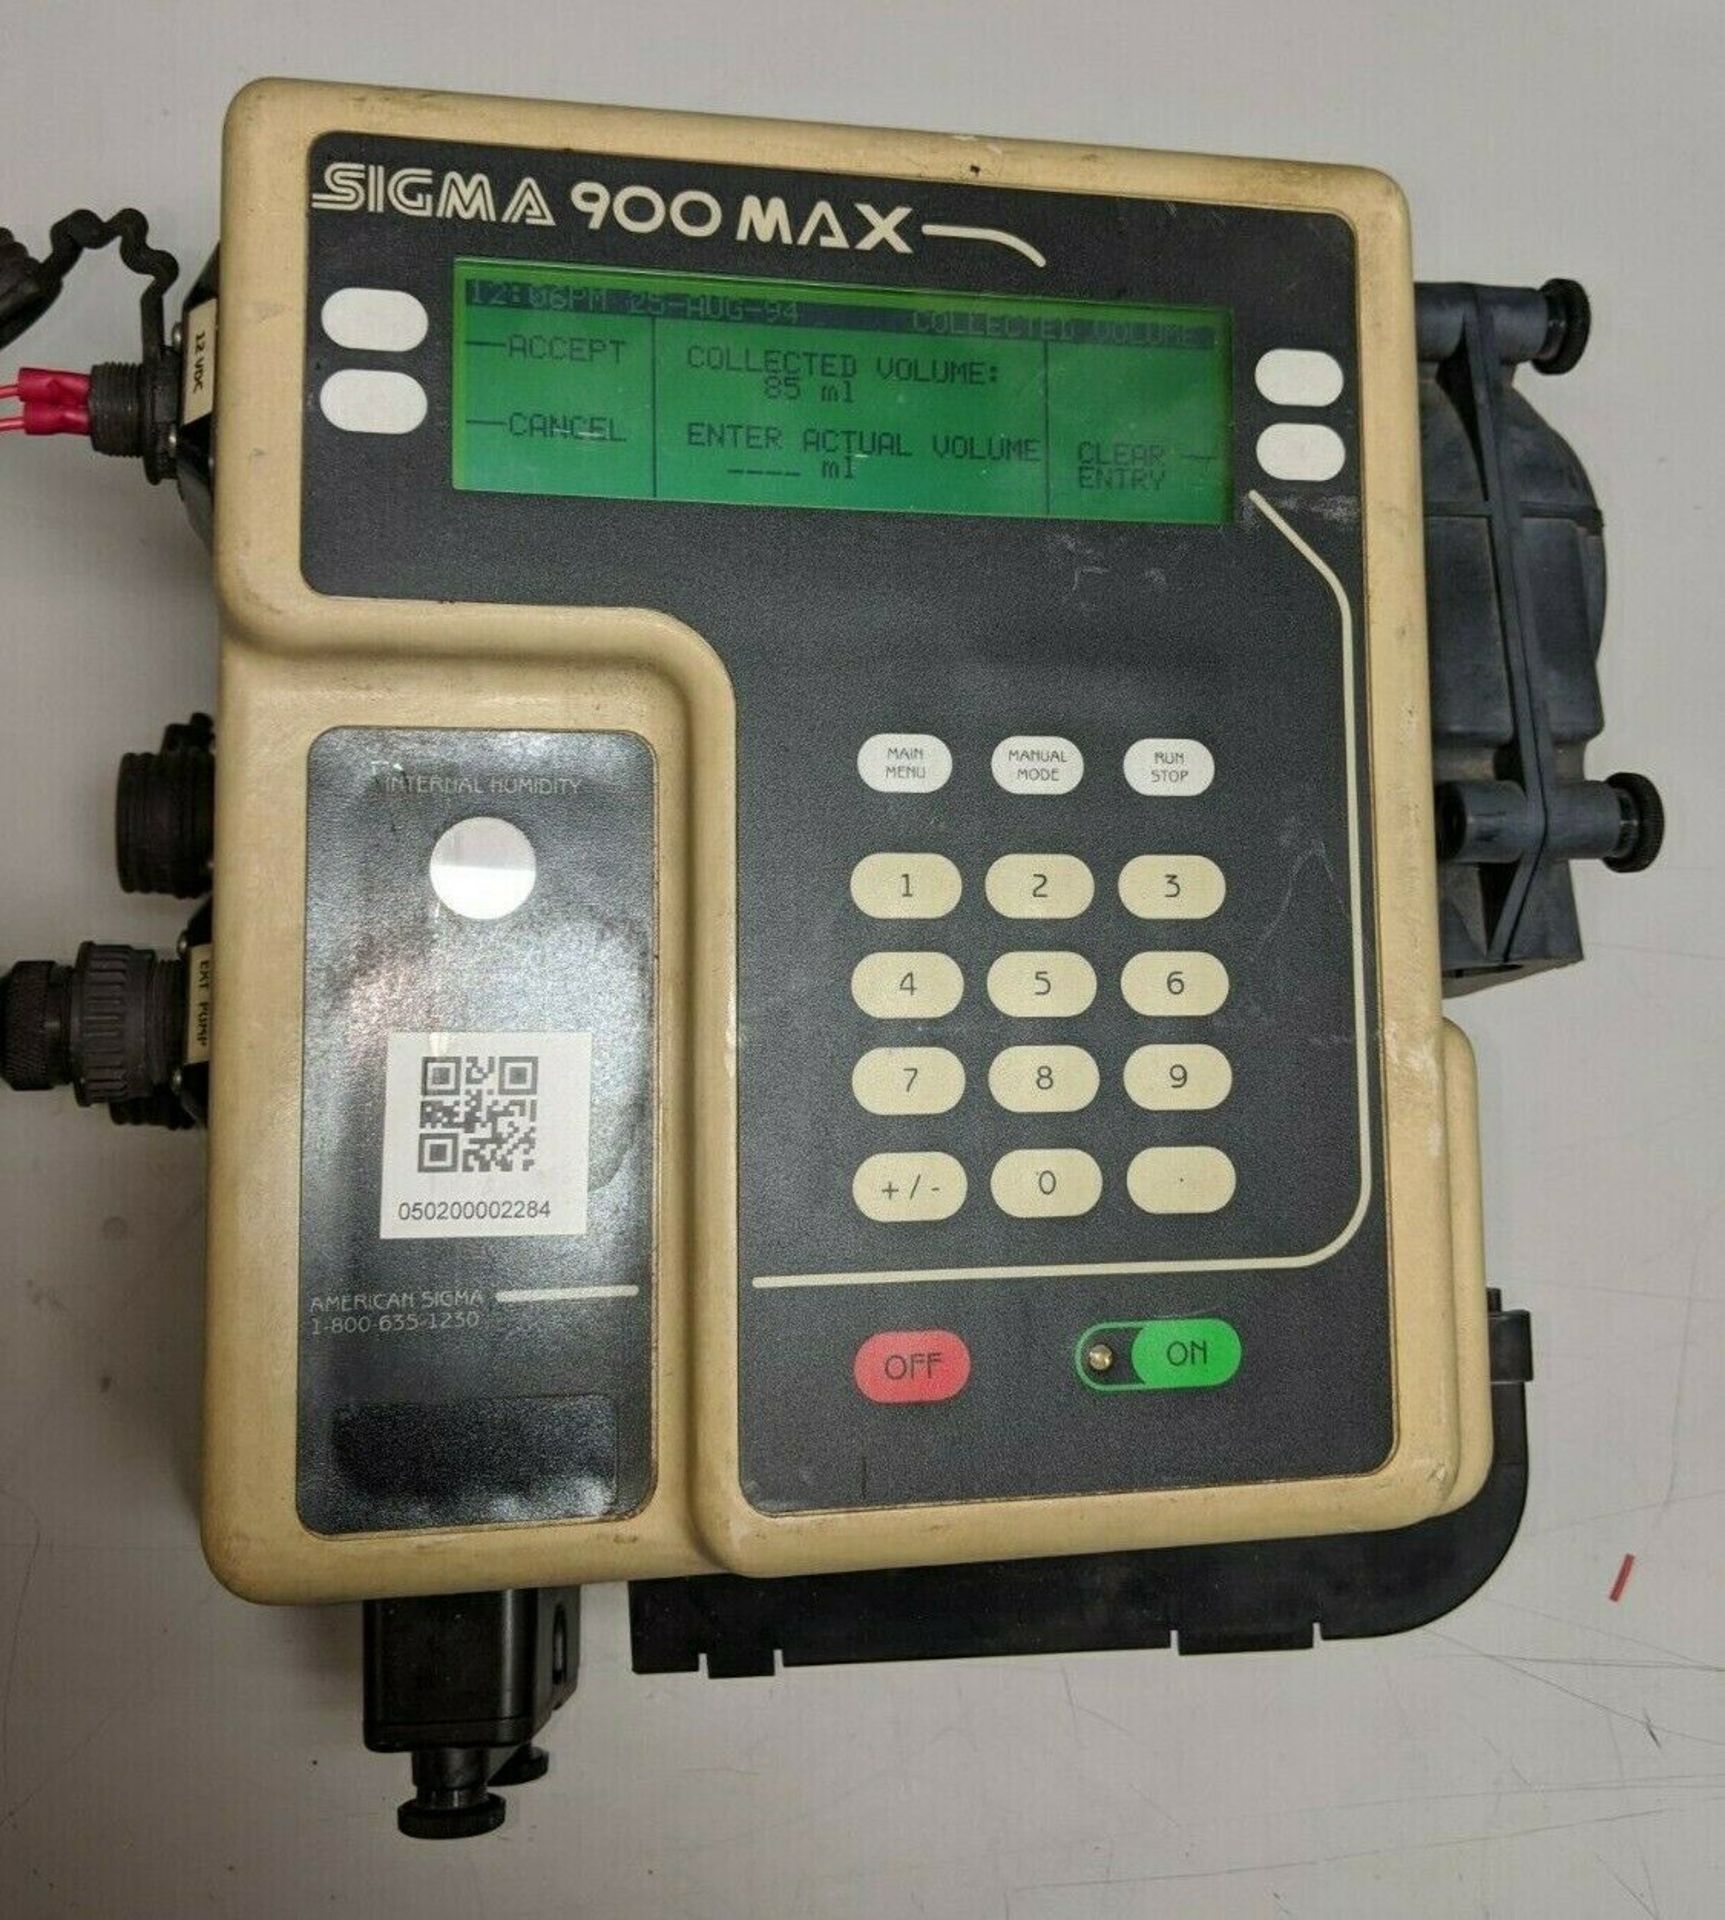 HACH SIGMA 900 MAX PORTABLE WATER SAMPLER